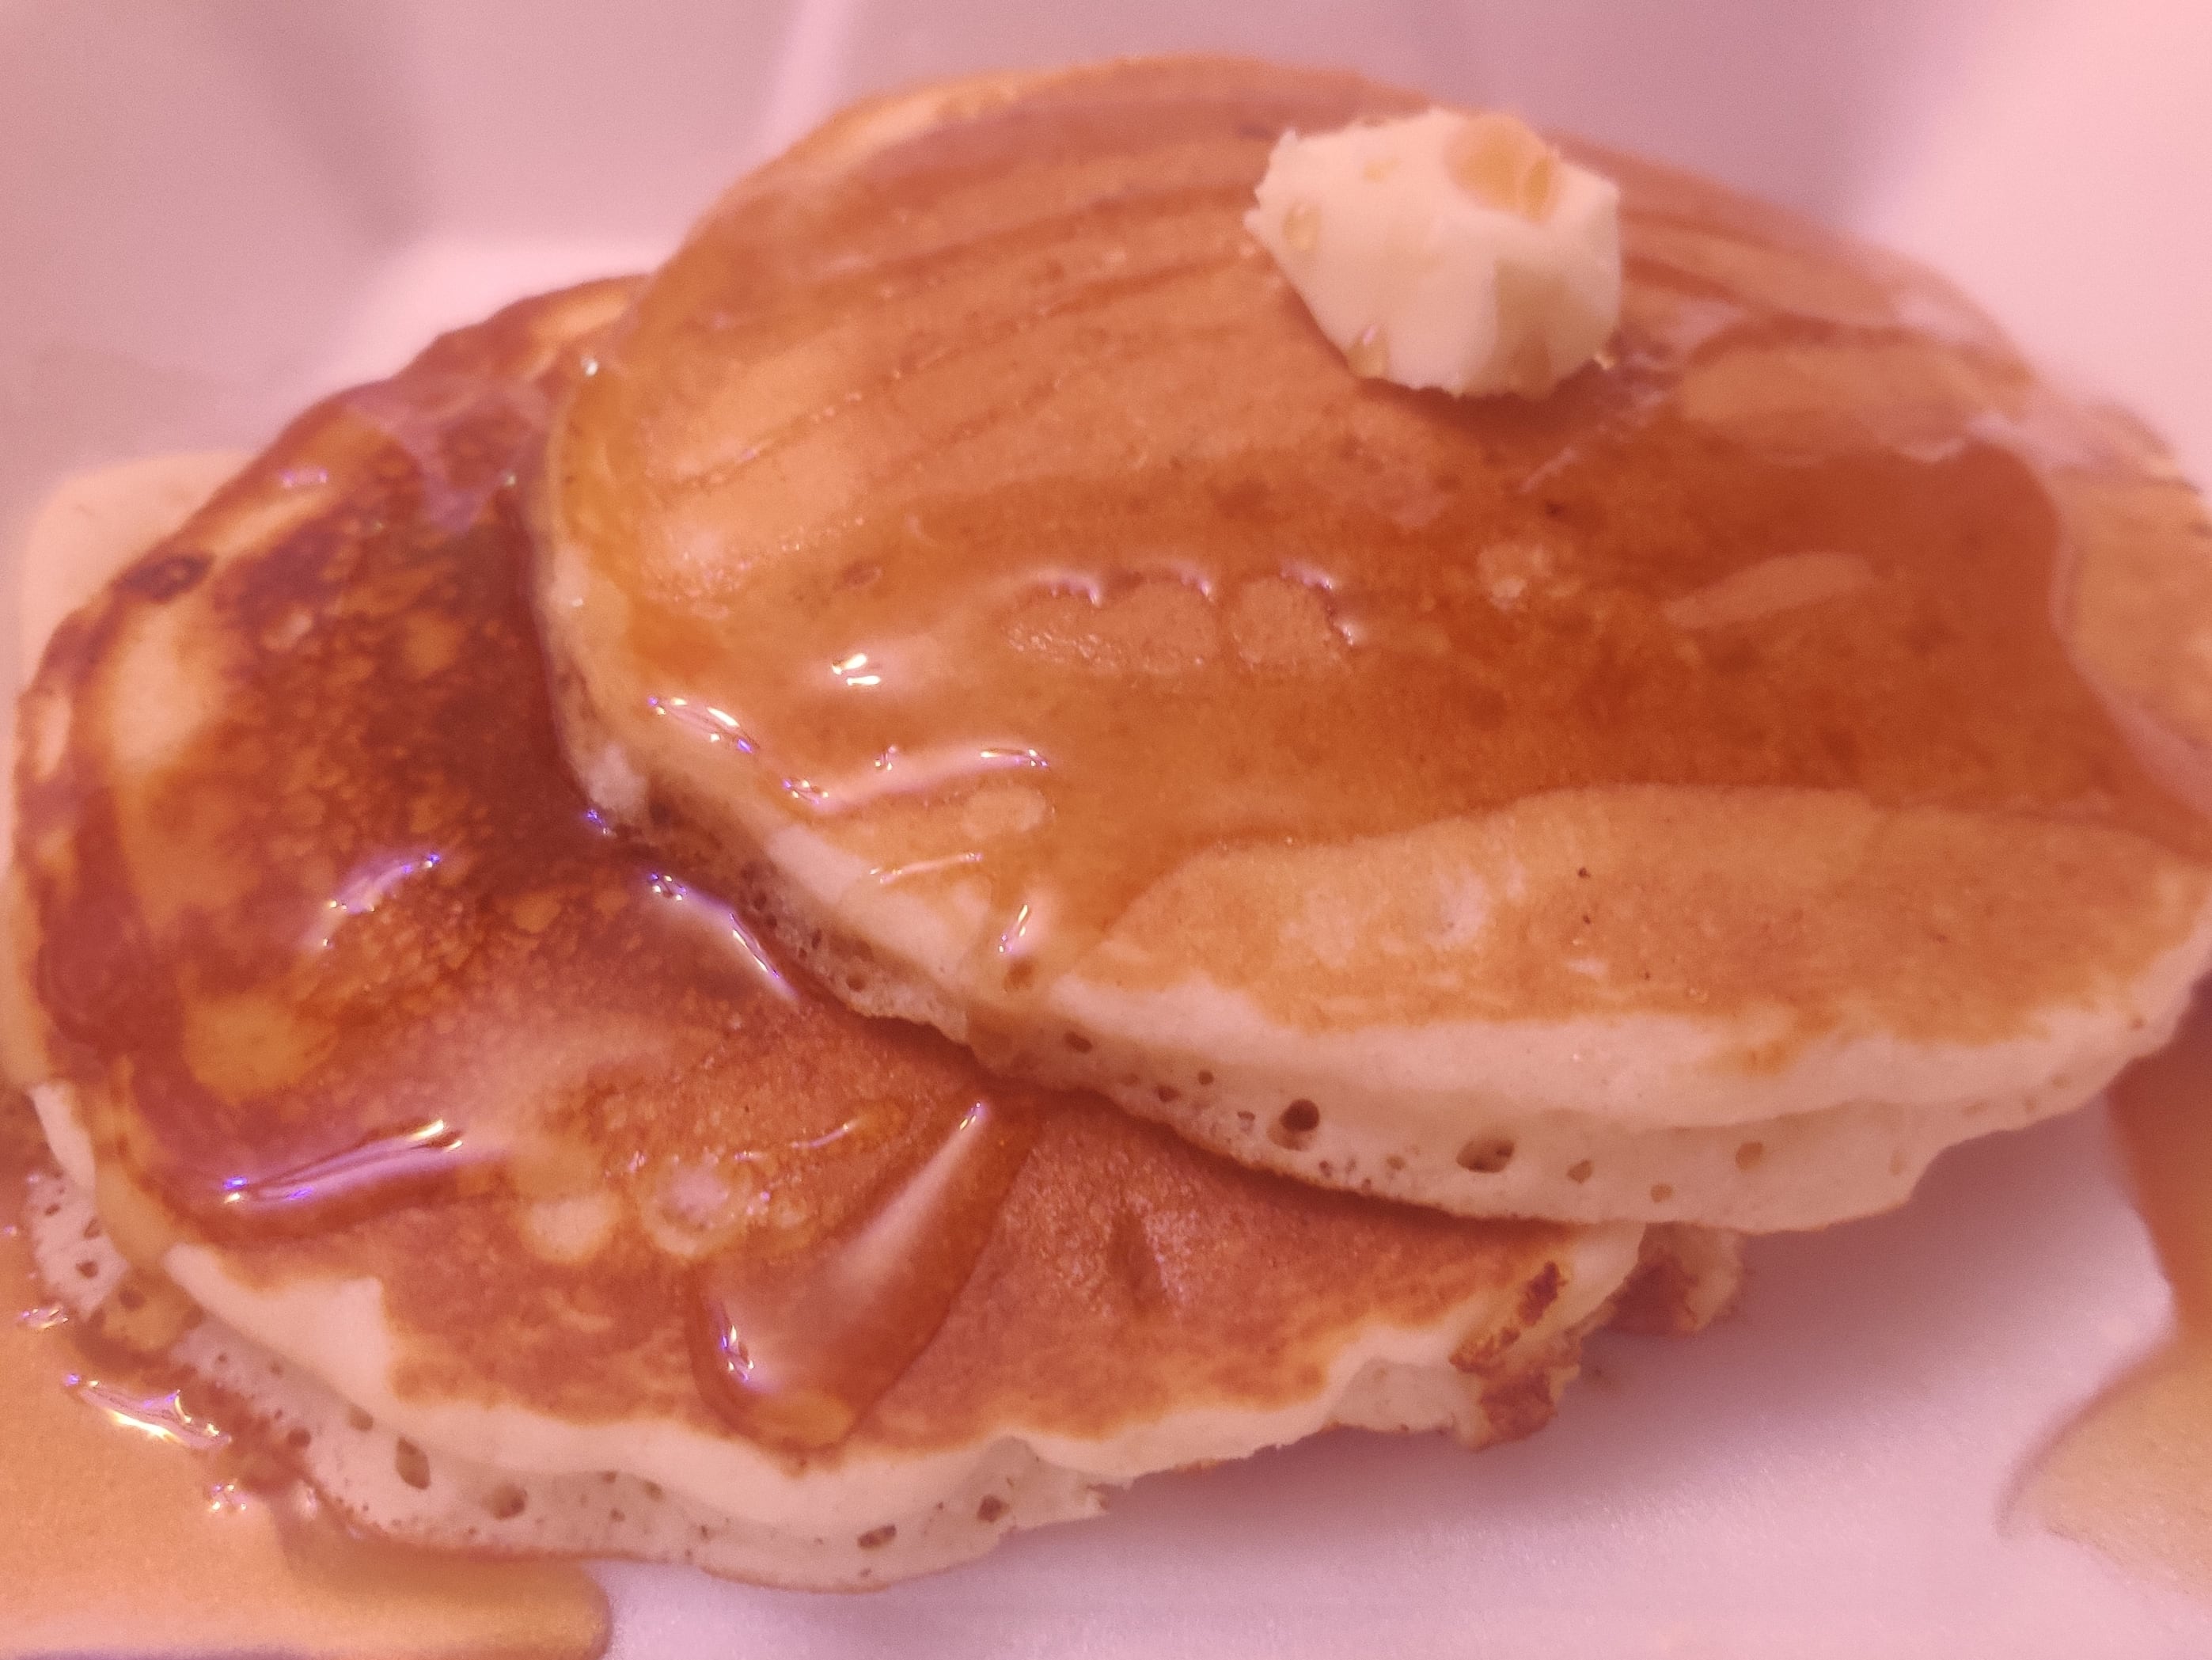 New pancake restaurant opens in Plainfield